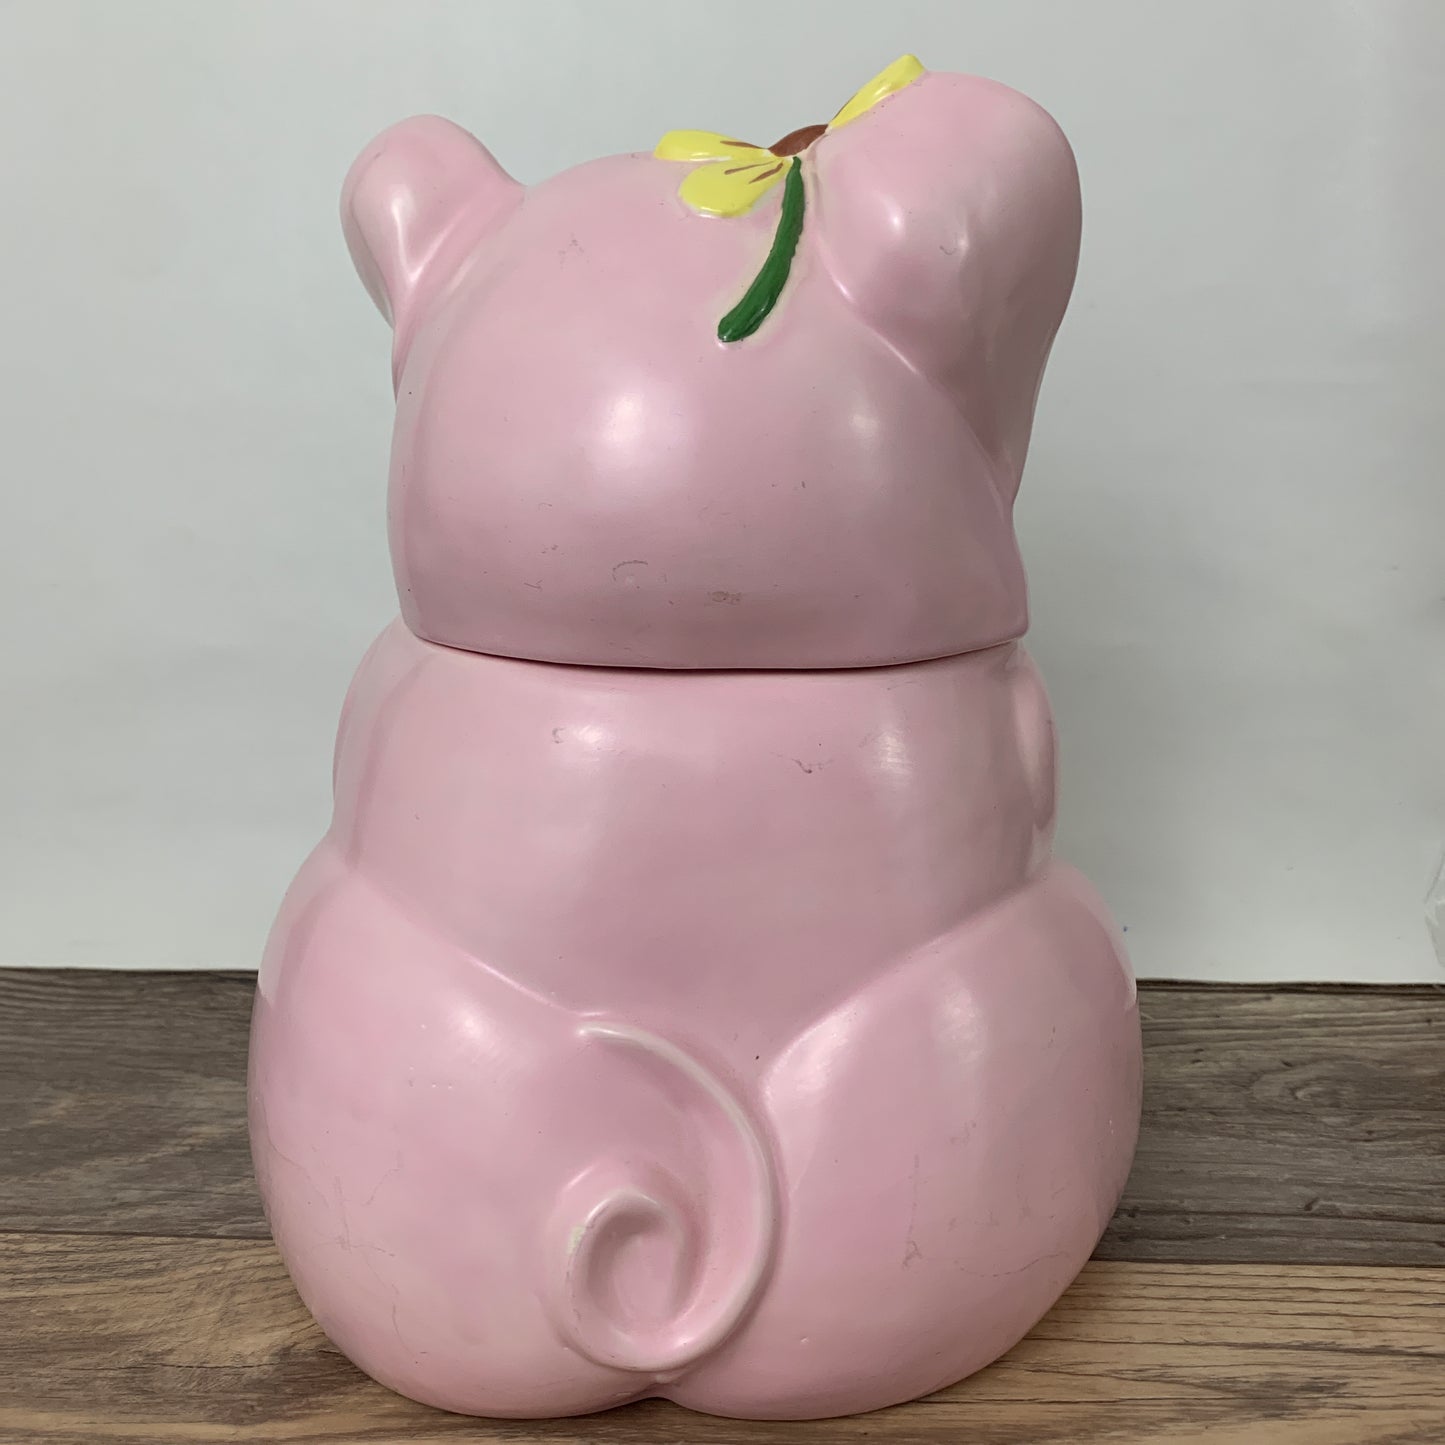 Large Ceramic Cookie Jar, Pink Pig with Flowers